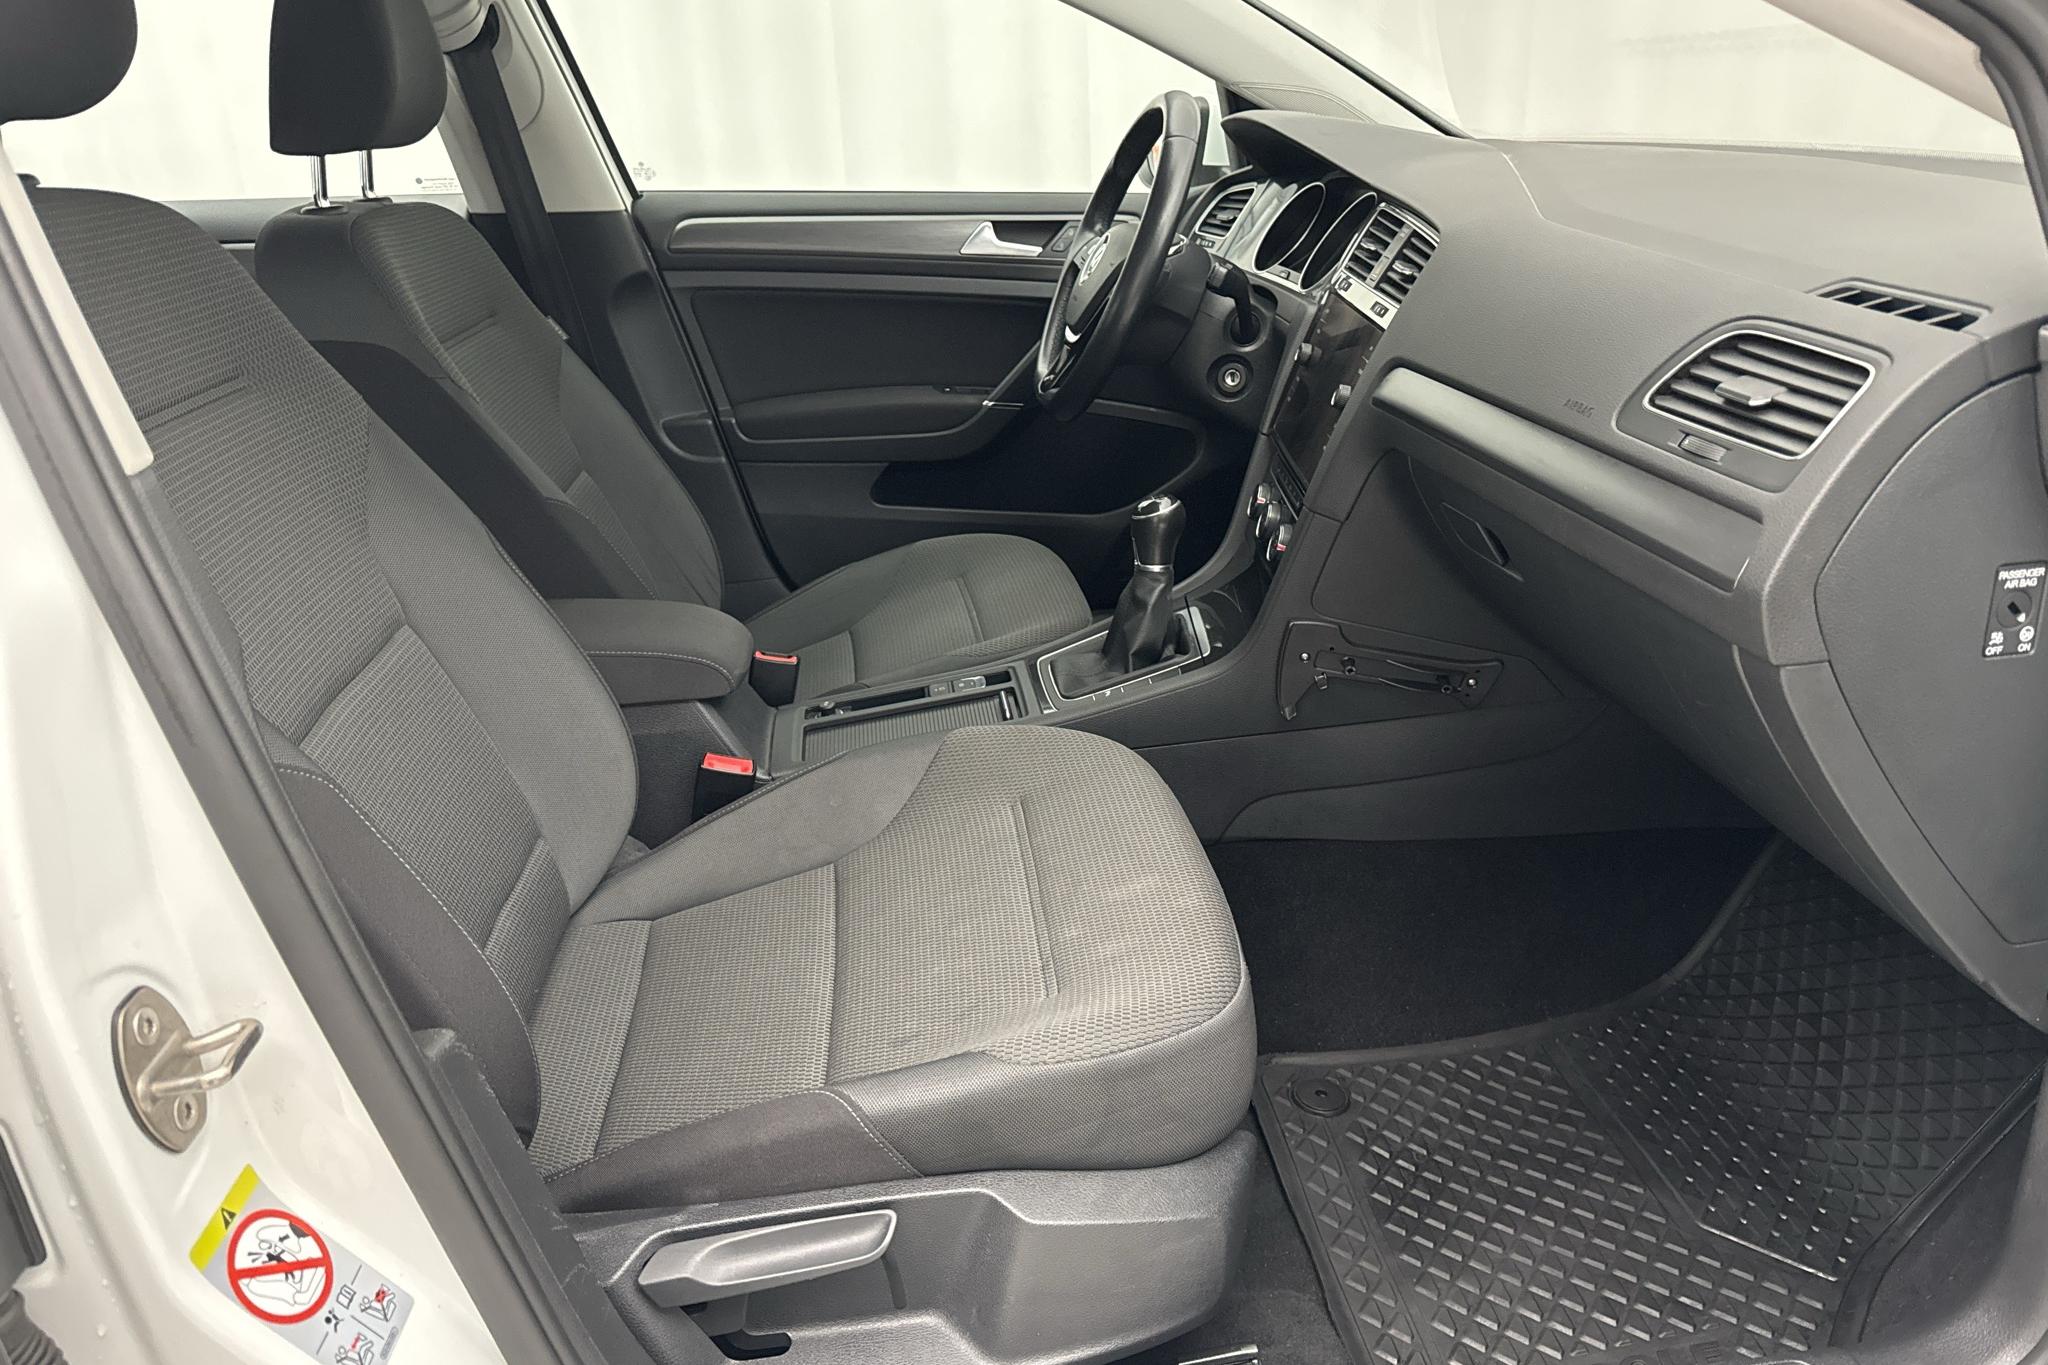 VW Golf VII 1.4 TSI Multifuel 5dr (125hk) - 5 983 mil - Manuell - vit - 2018